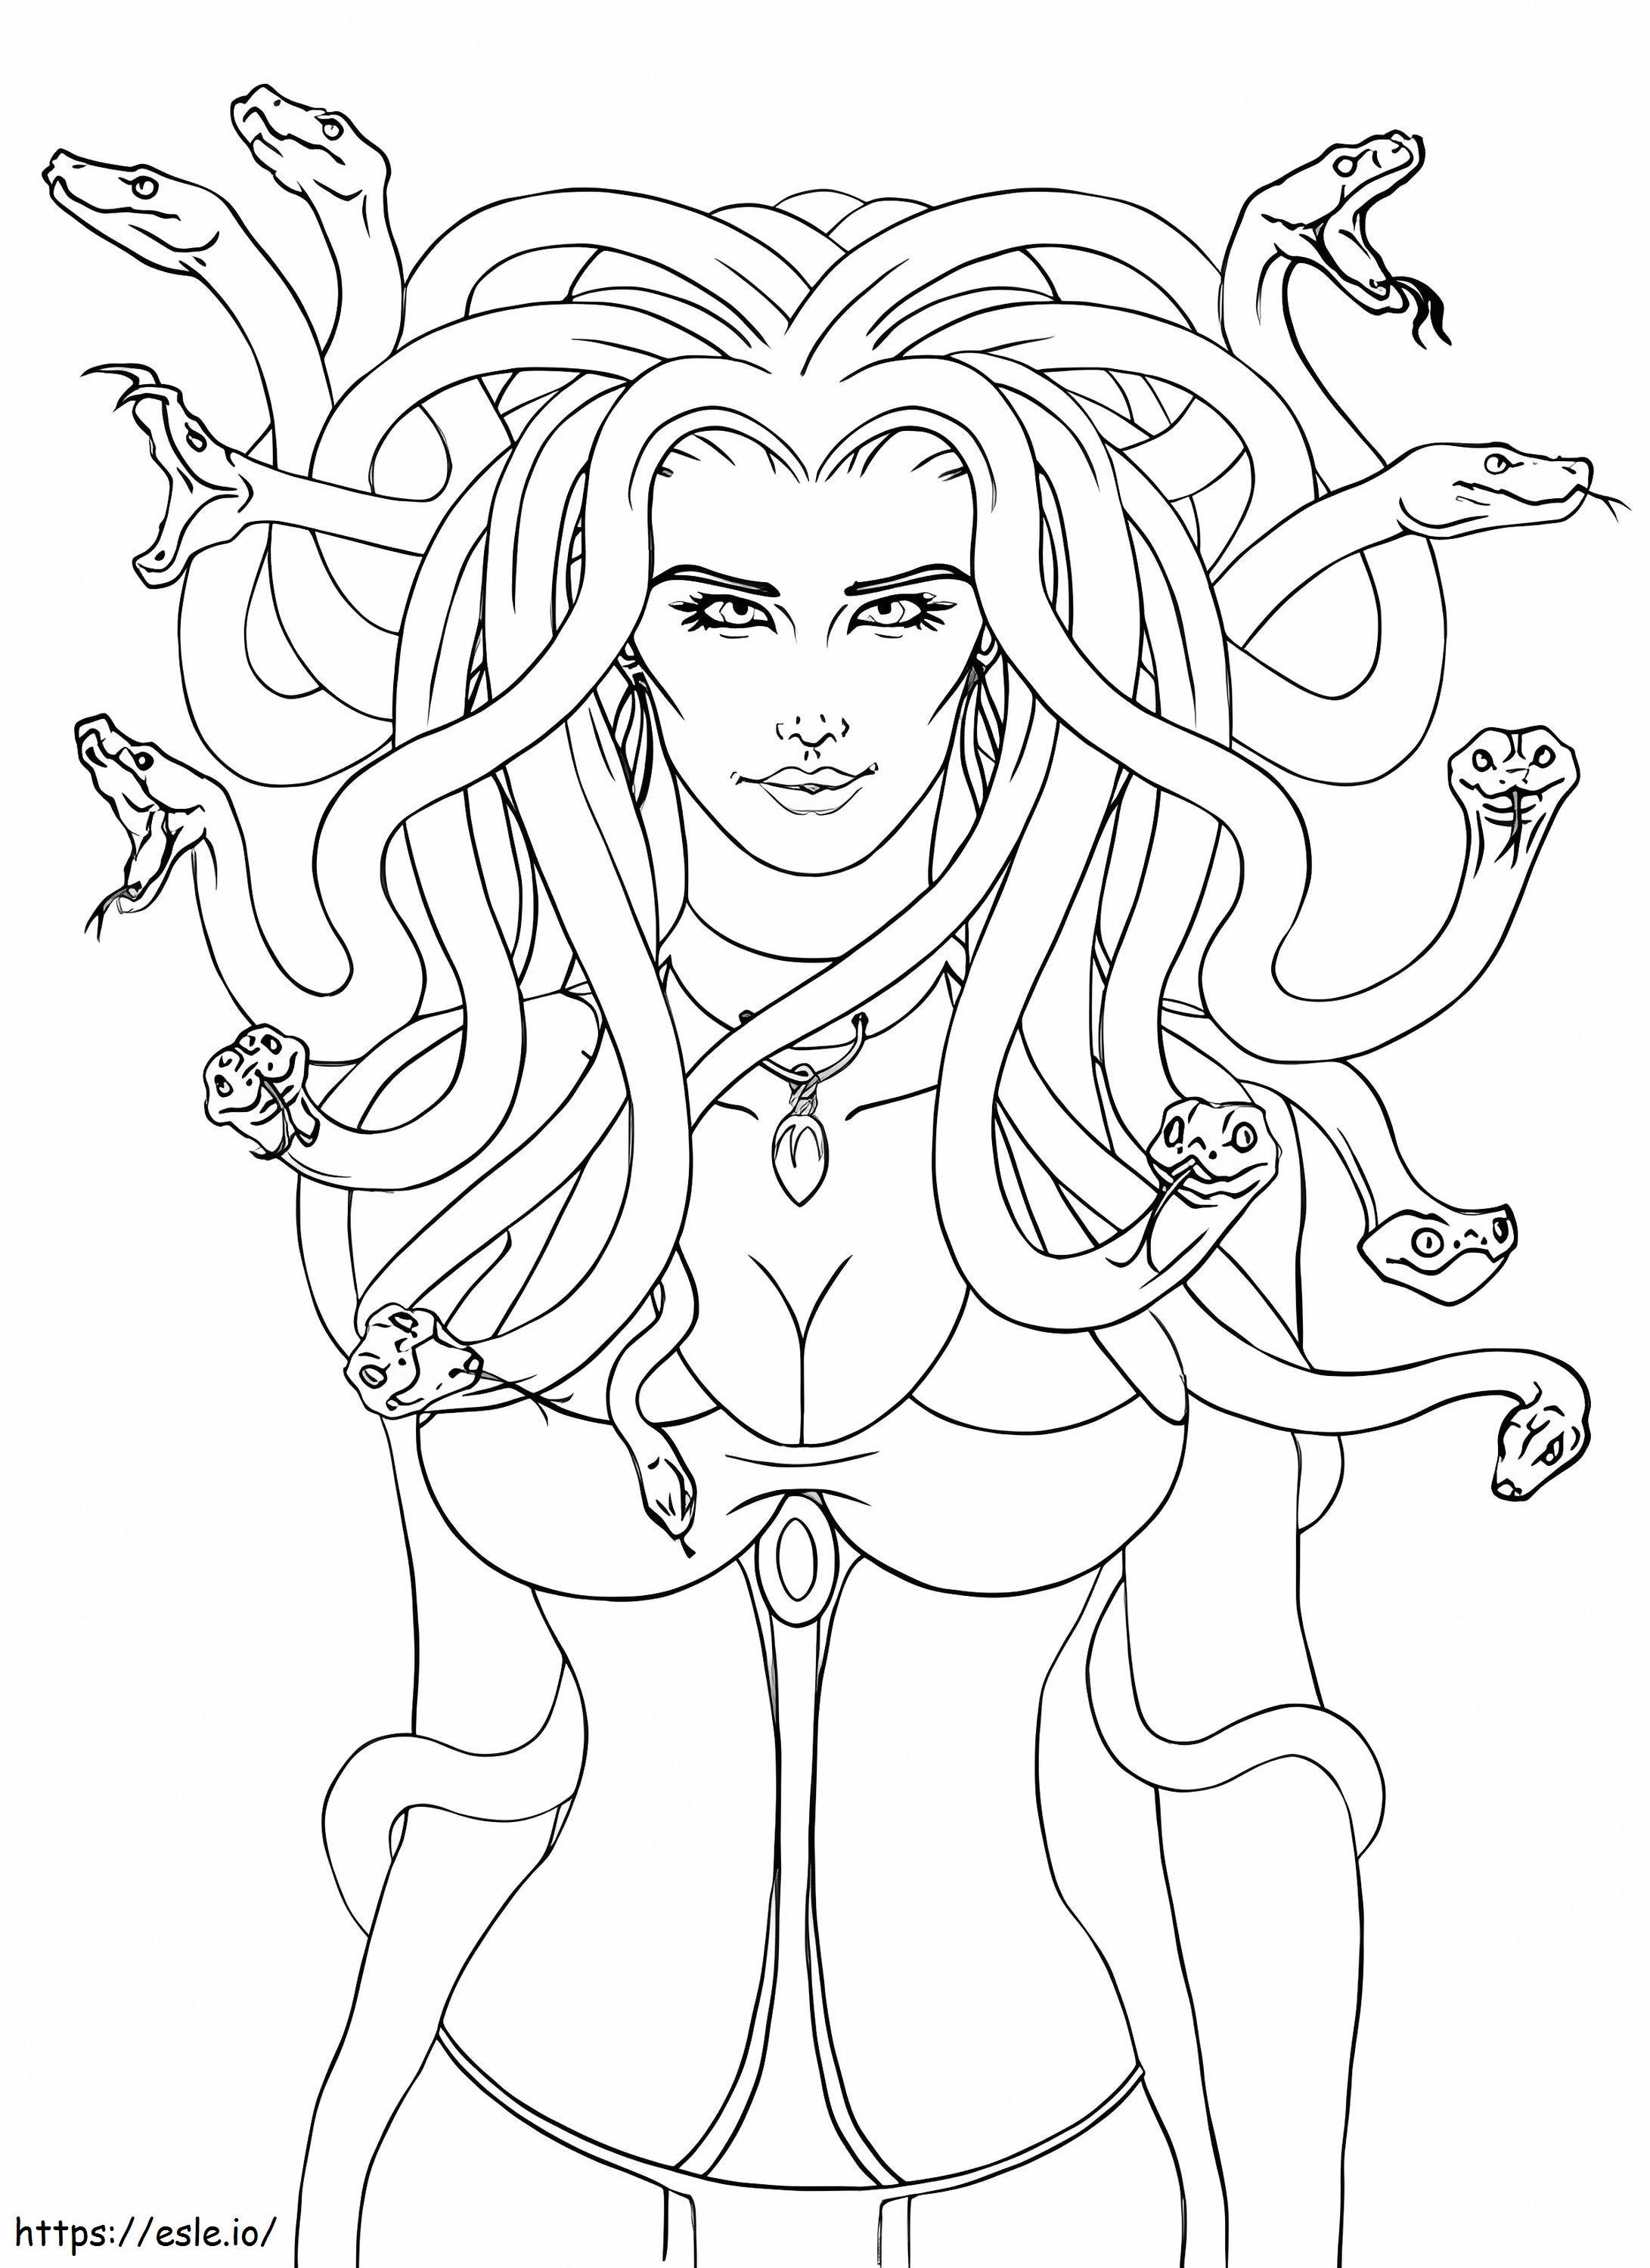 Wonderful Medusa coloring page